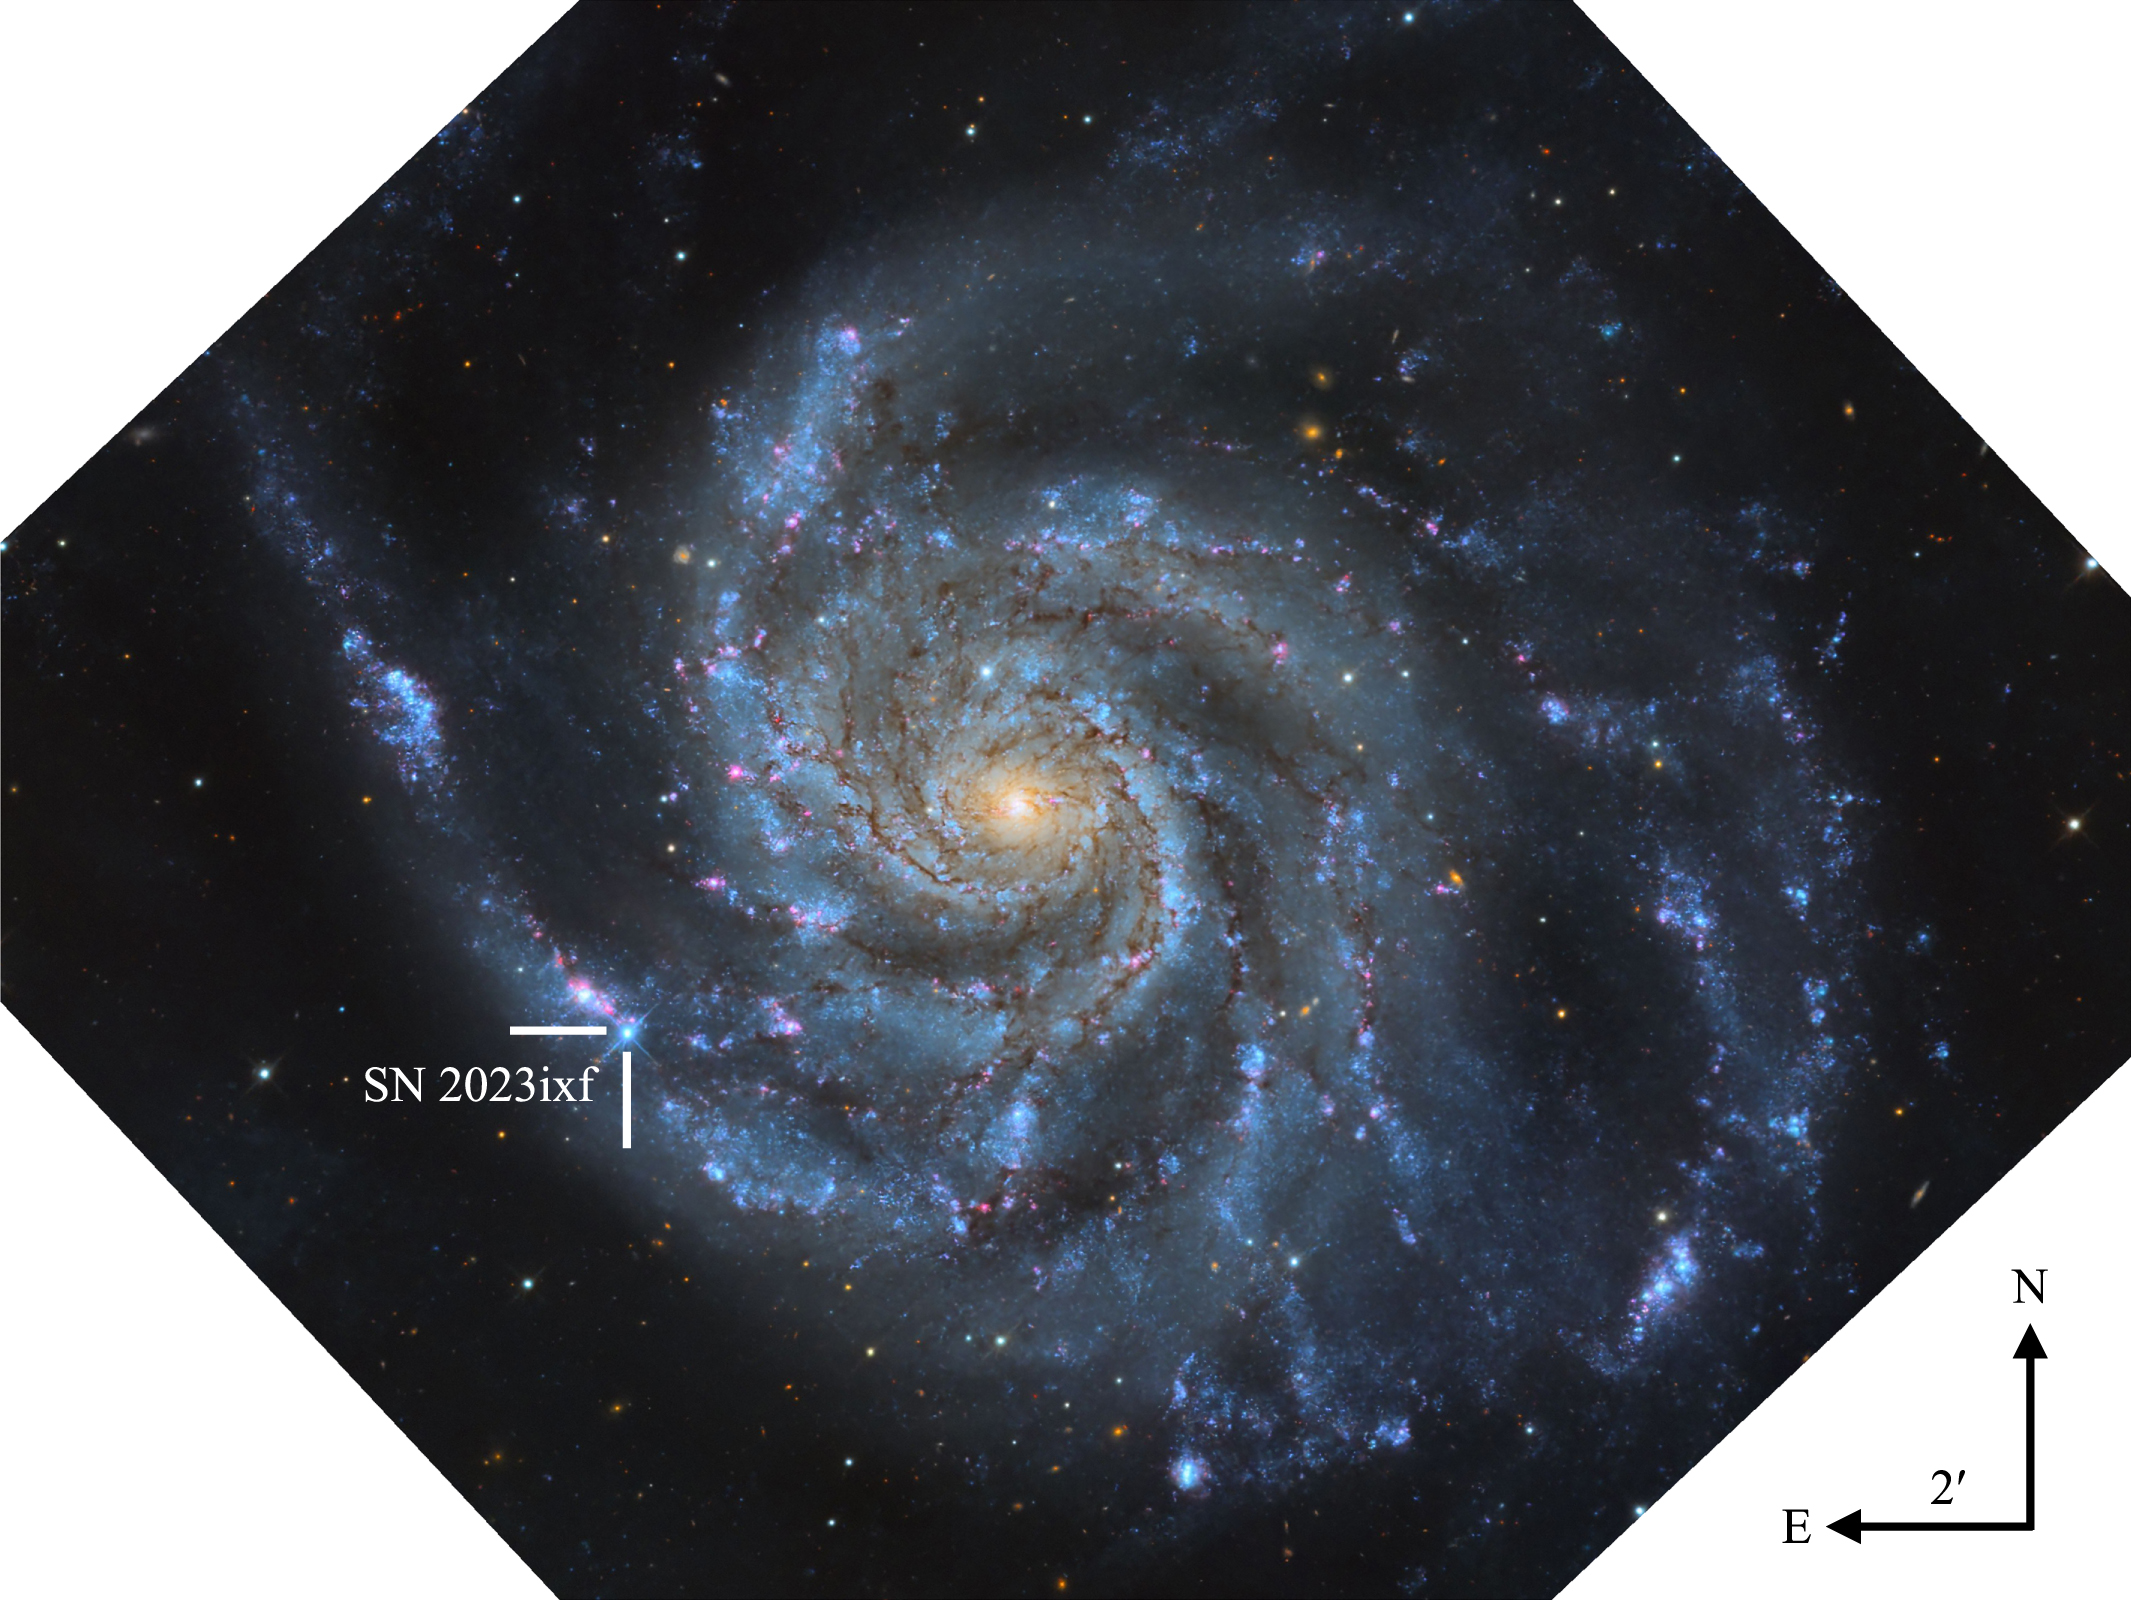 sn 2023ixf occurred in a spiral arm of the pinwheel galaxy near several star-forming regions. Credit: Travis Deyoe, Mount Lemmon SkyCenter, University of Arizona